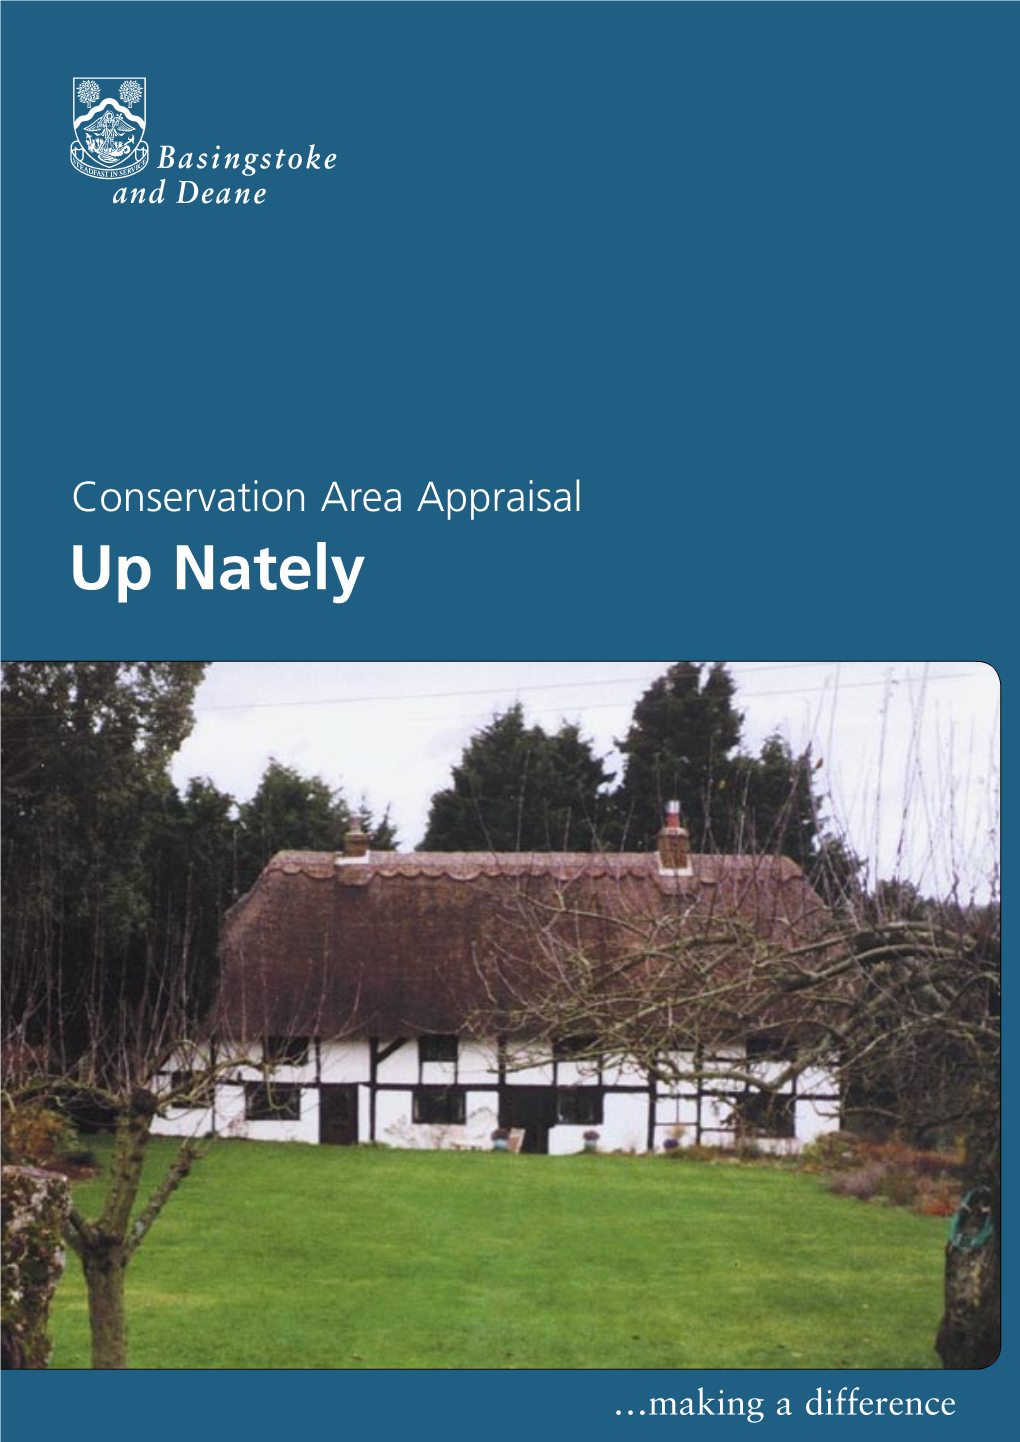 Up Nately Conservation Area Appraisal